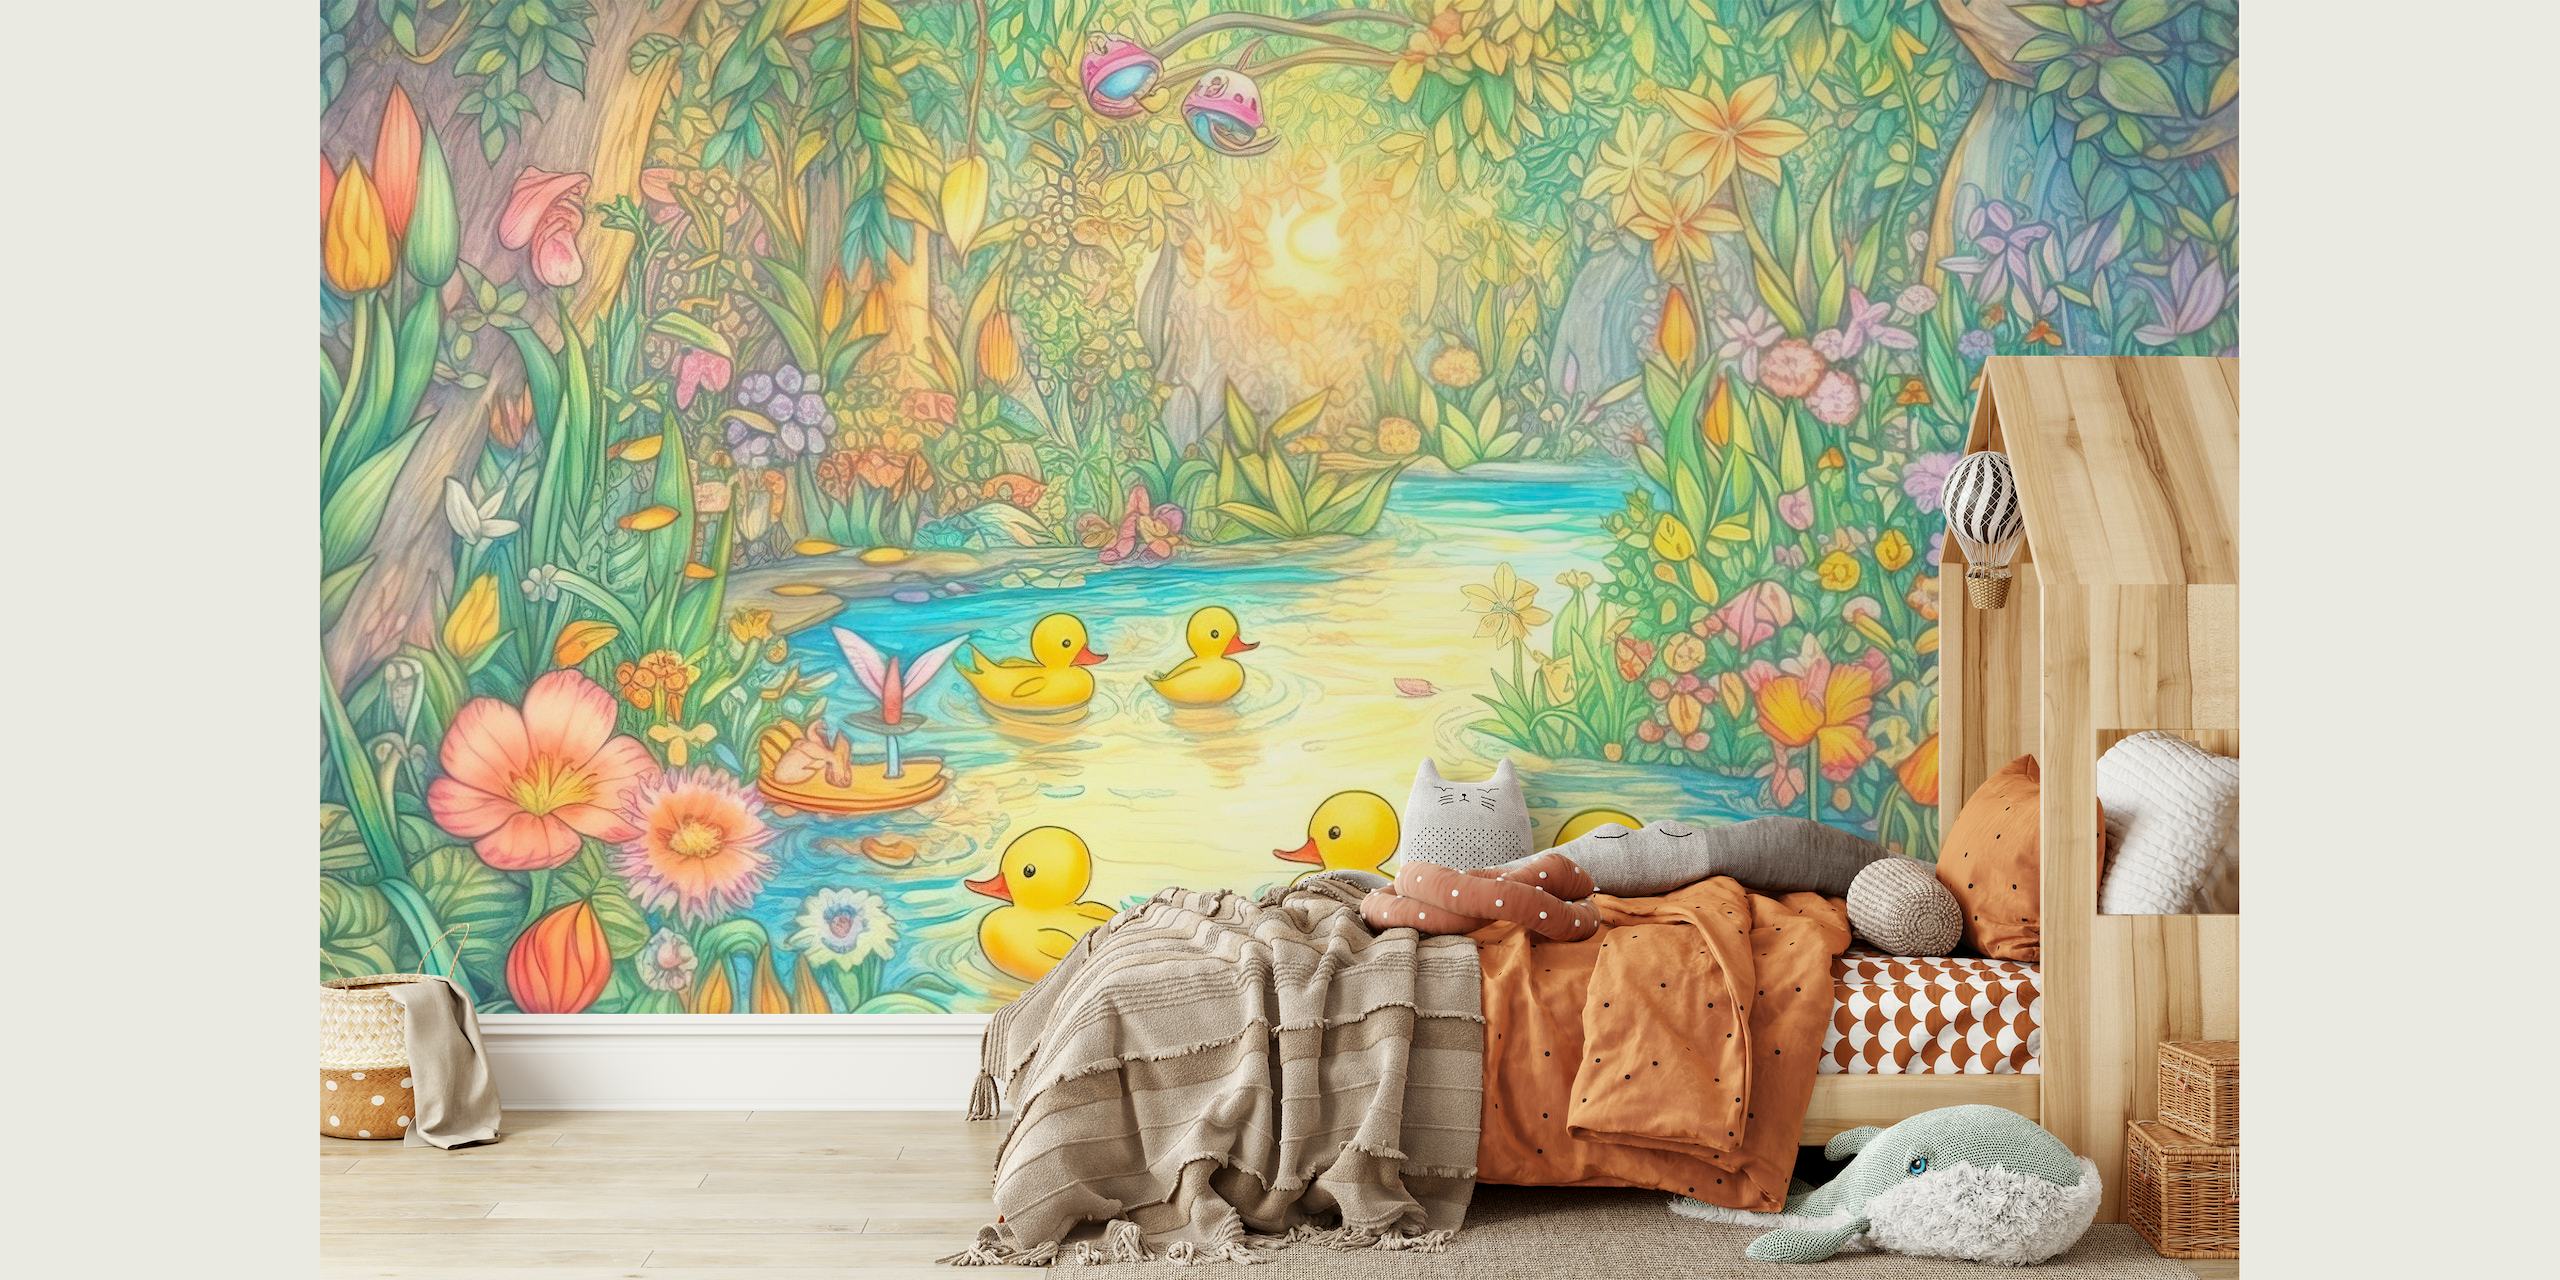 Toy Ducks wallpaper